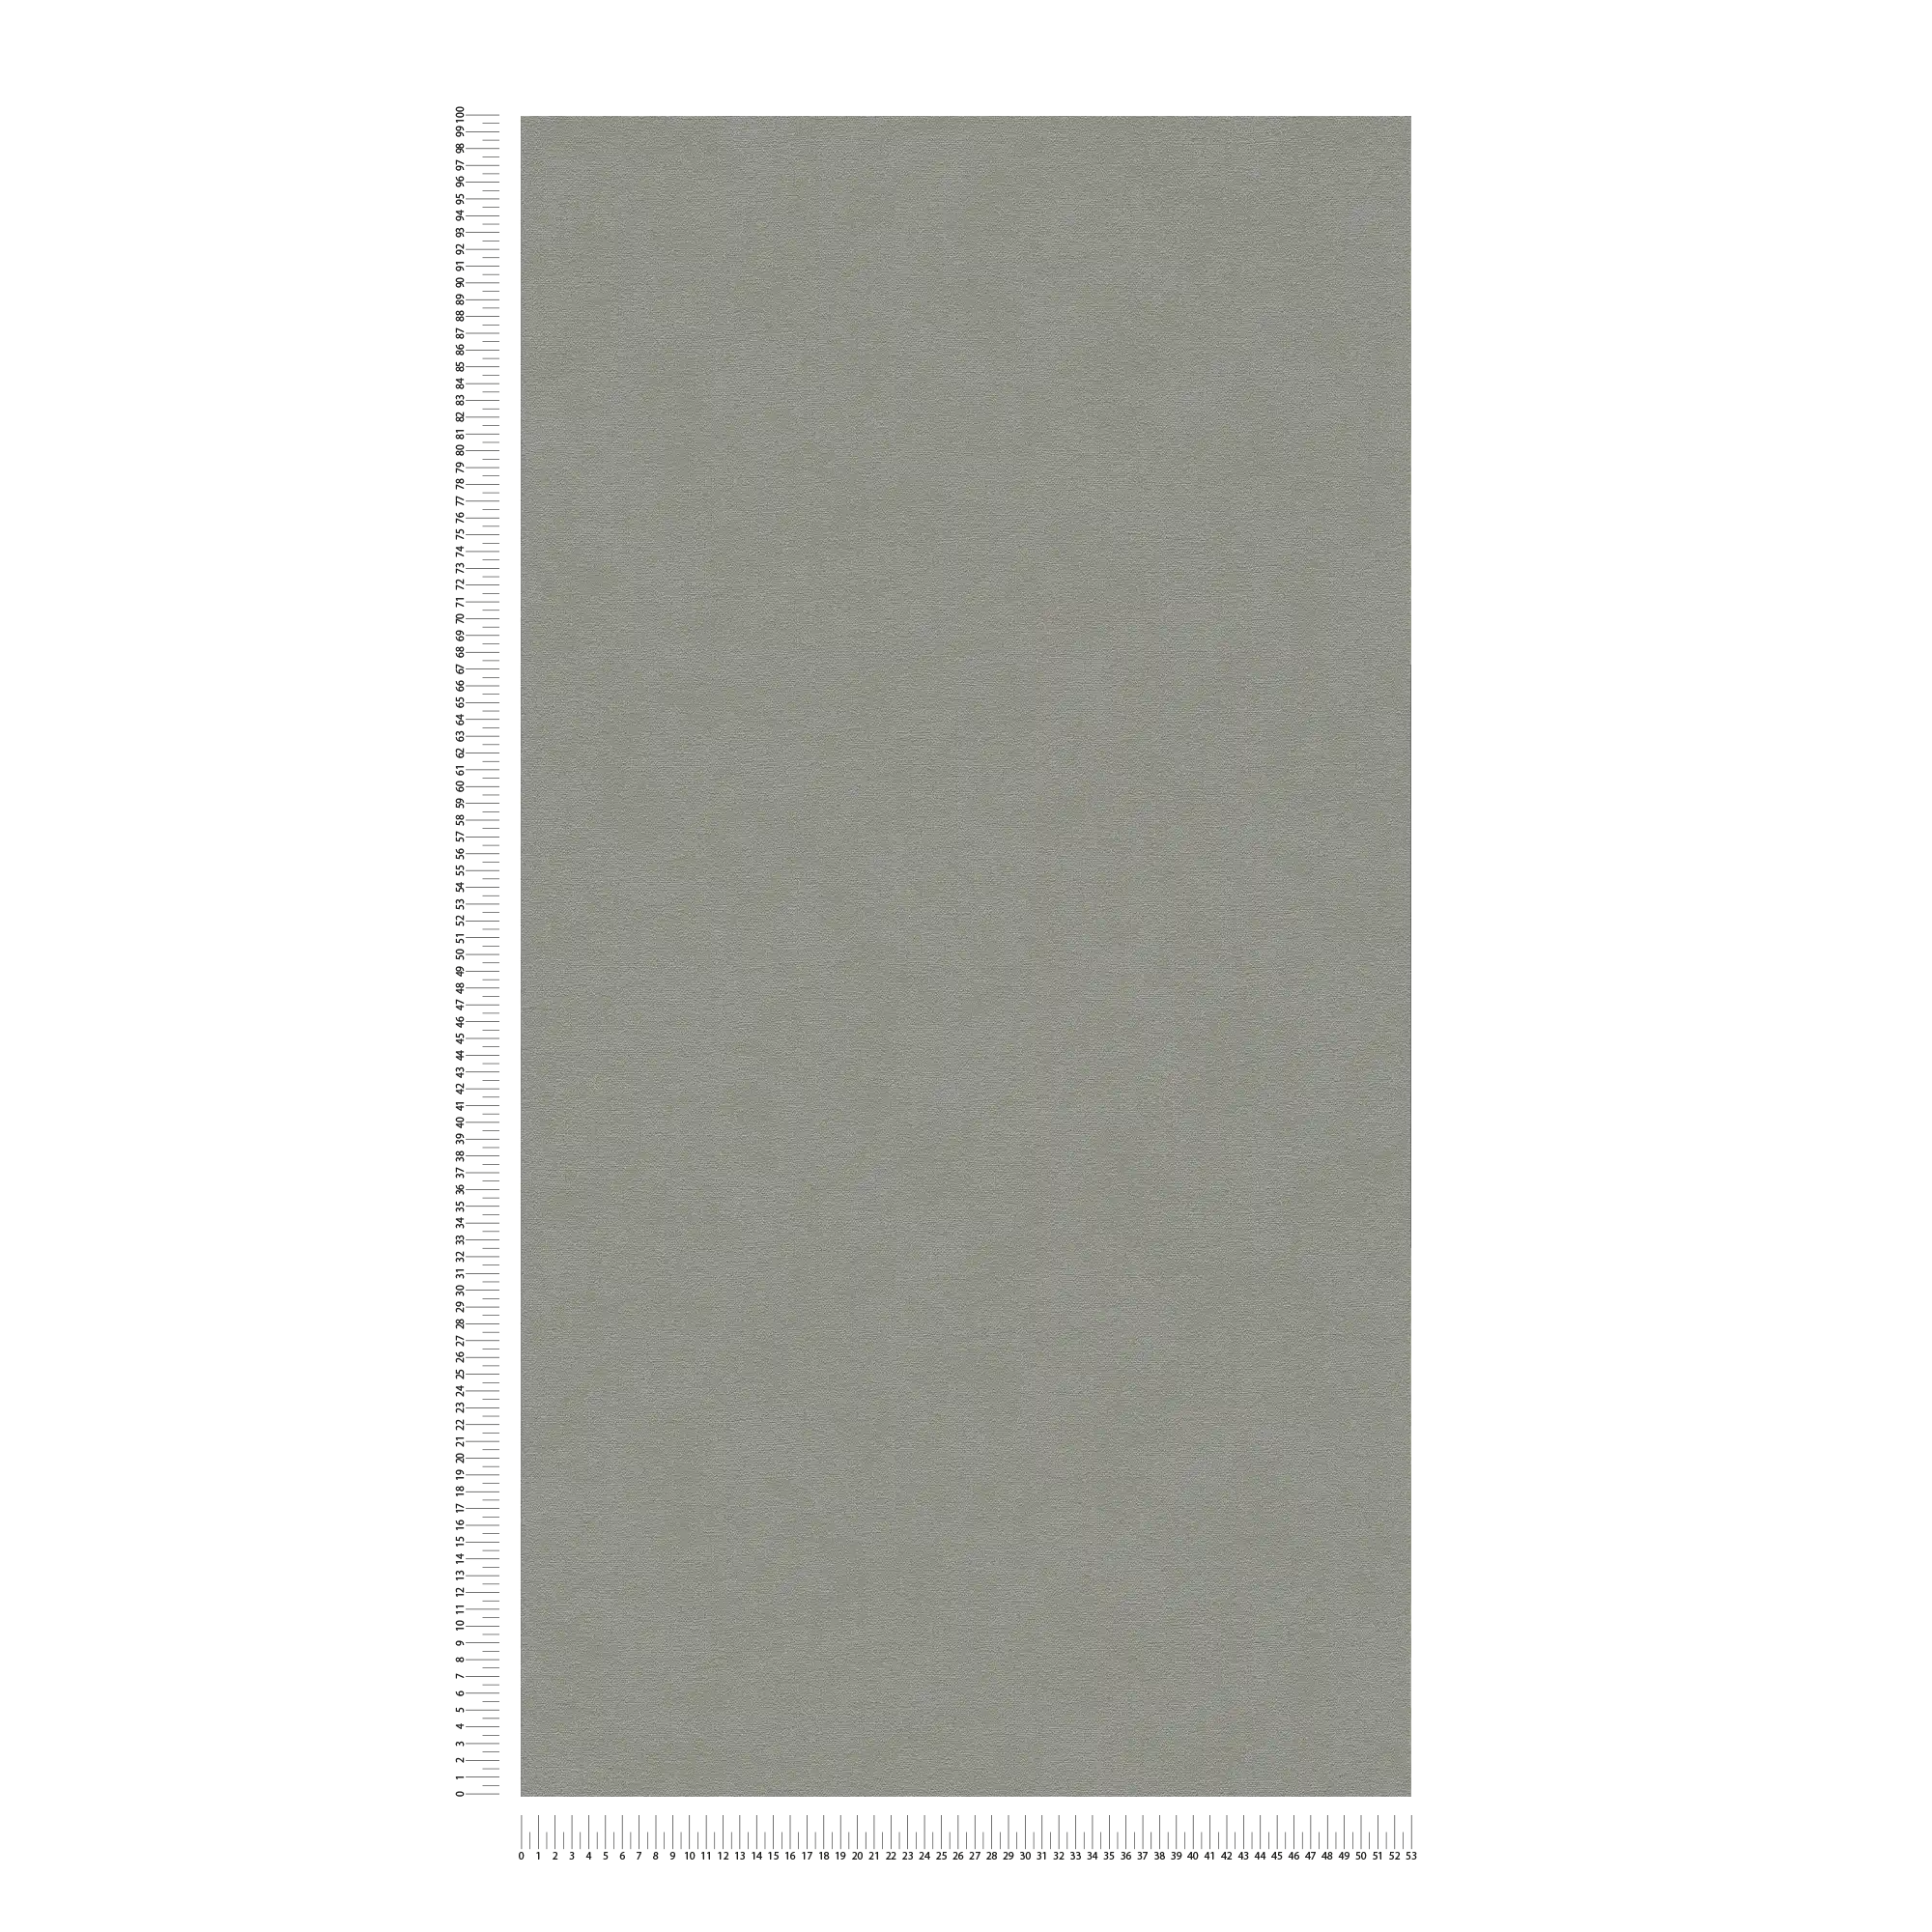             Papel pintado tejido-no tejido superficie monocolor textura fina - gris
        